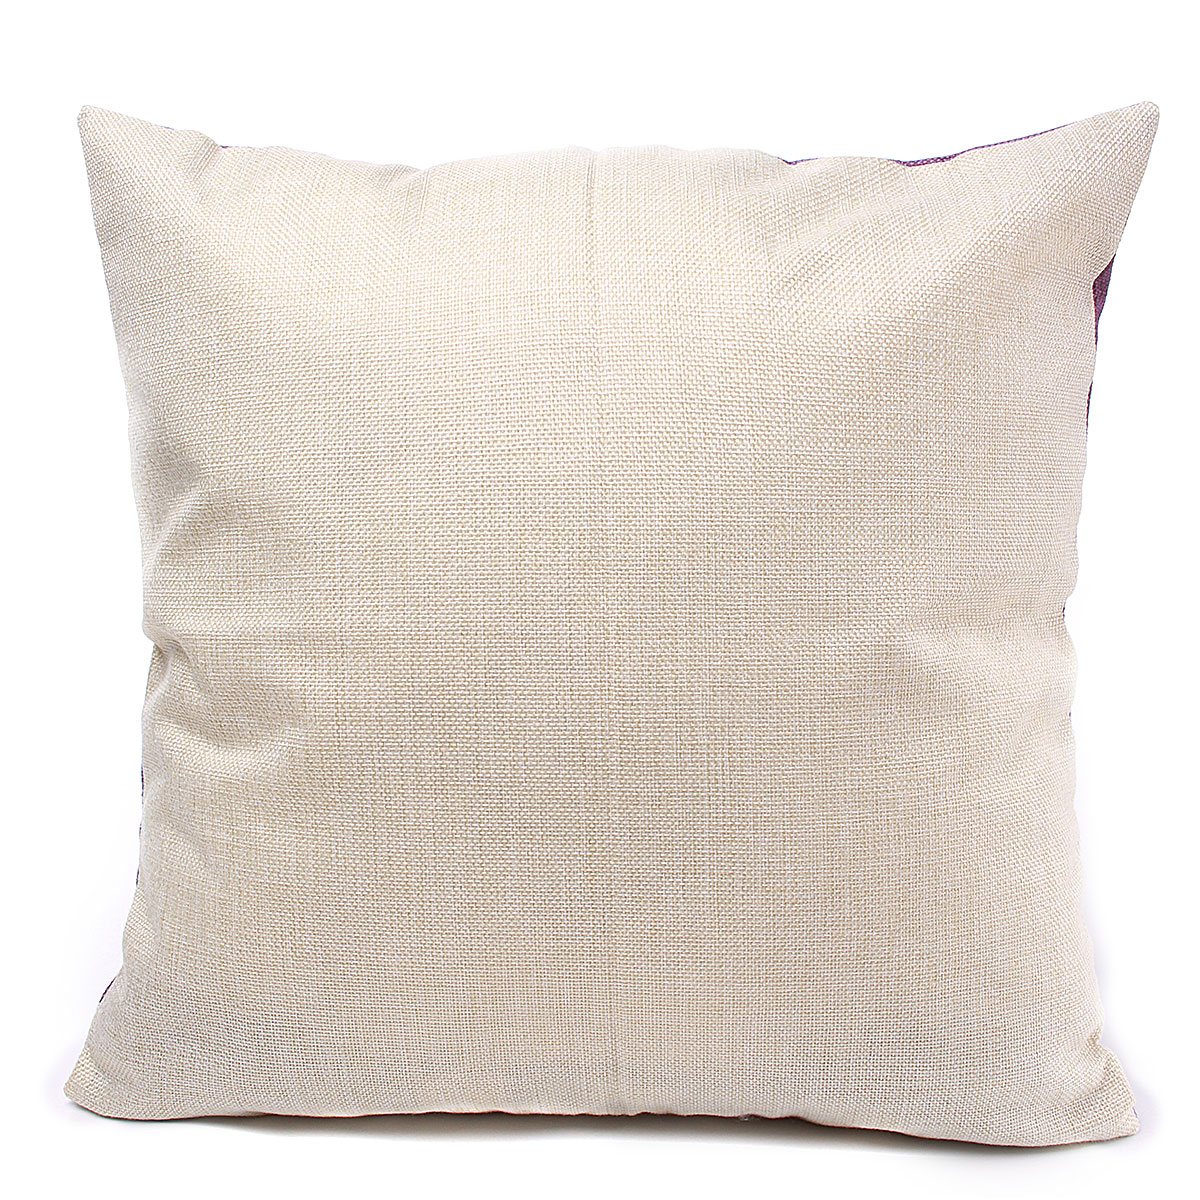 44x44cm-Purple-Linen-Pillow-Case-Throw-Cushion-Cover-Home-Decor-1050451-4